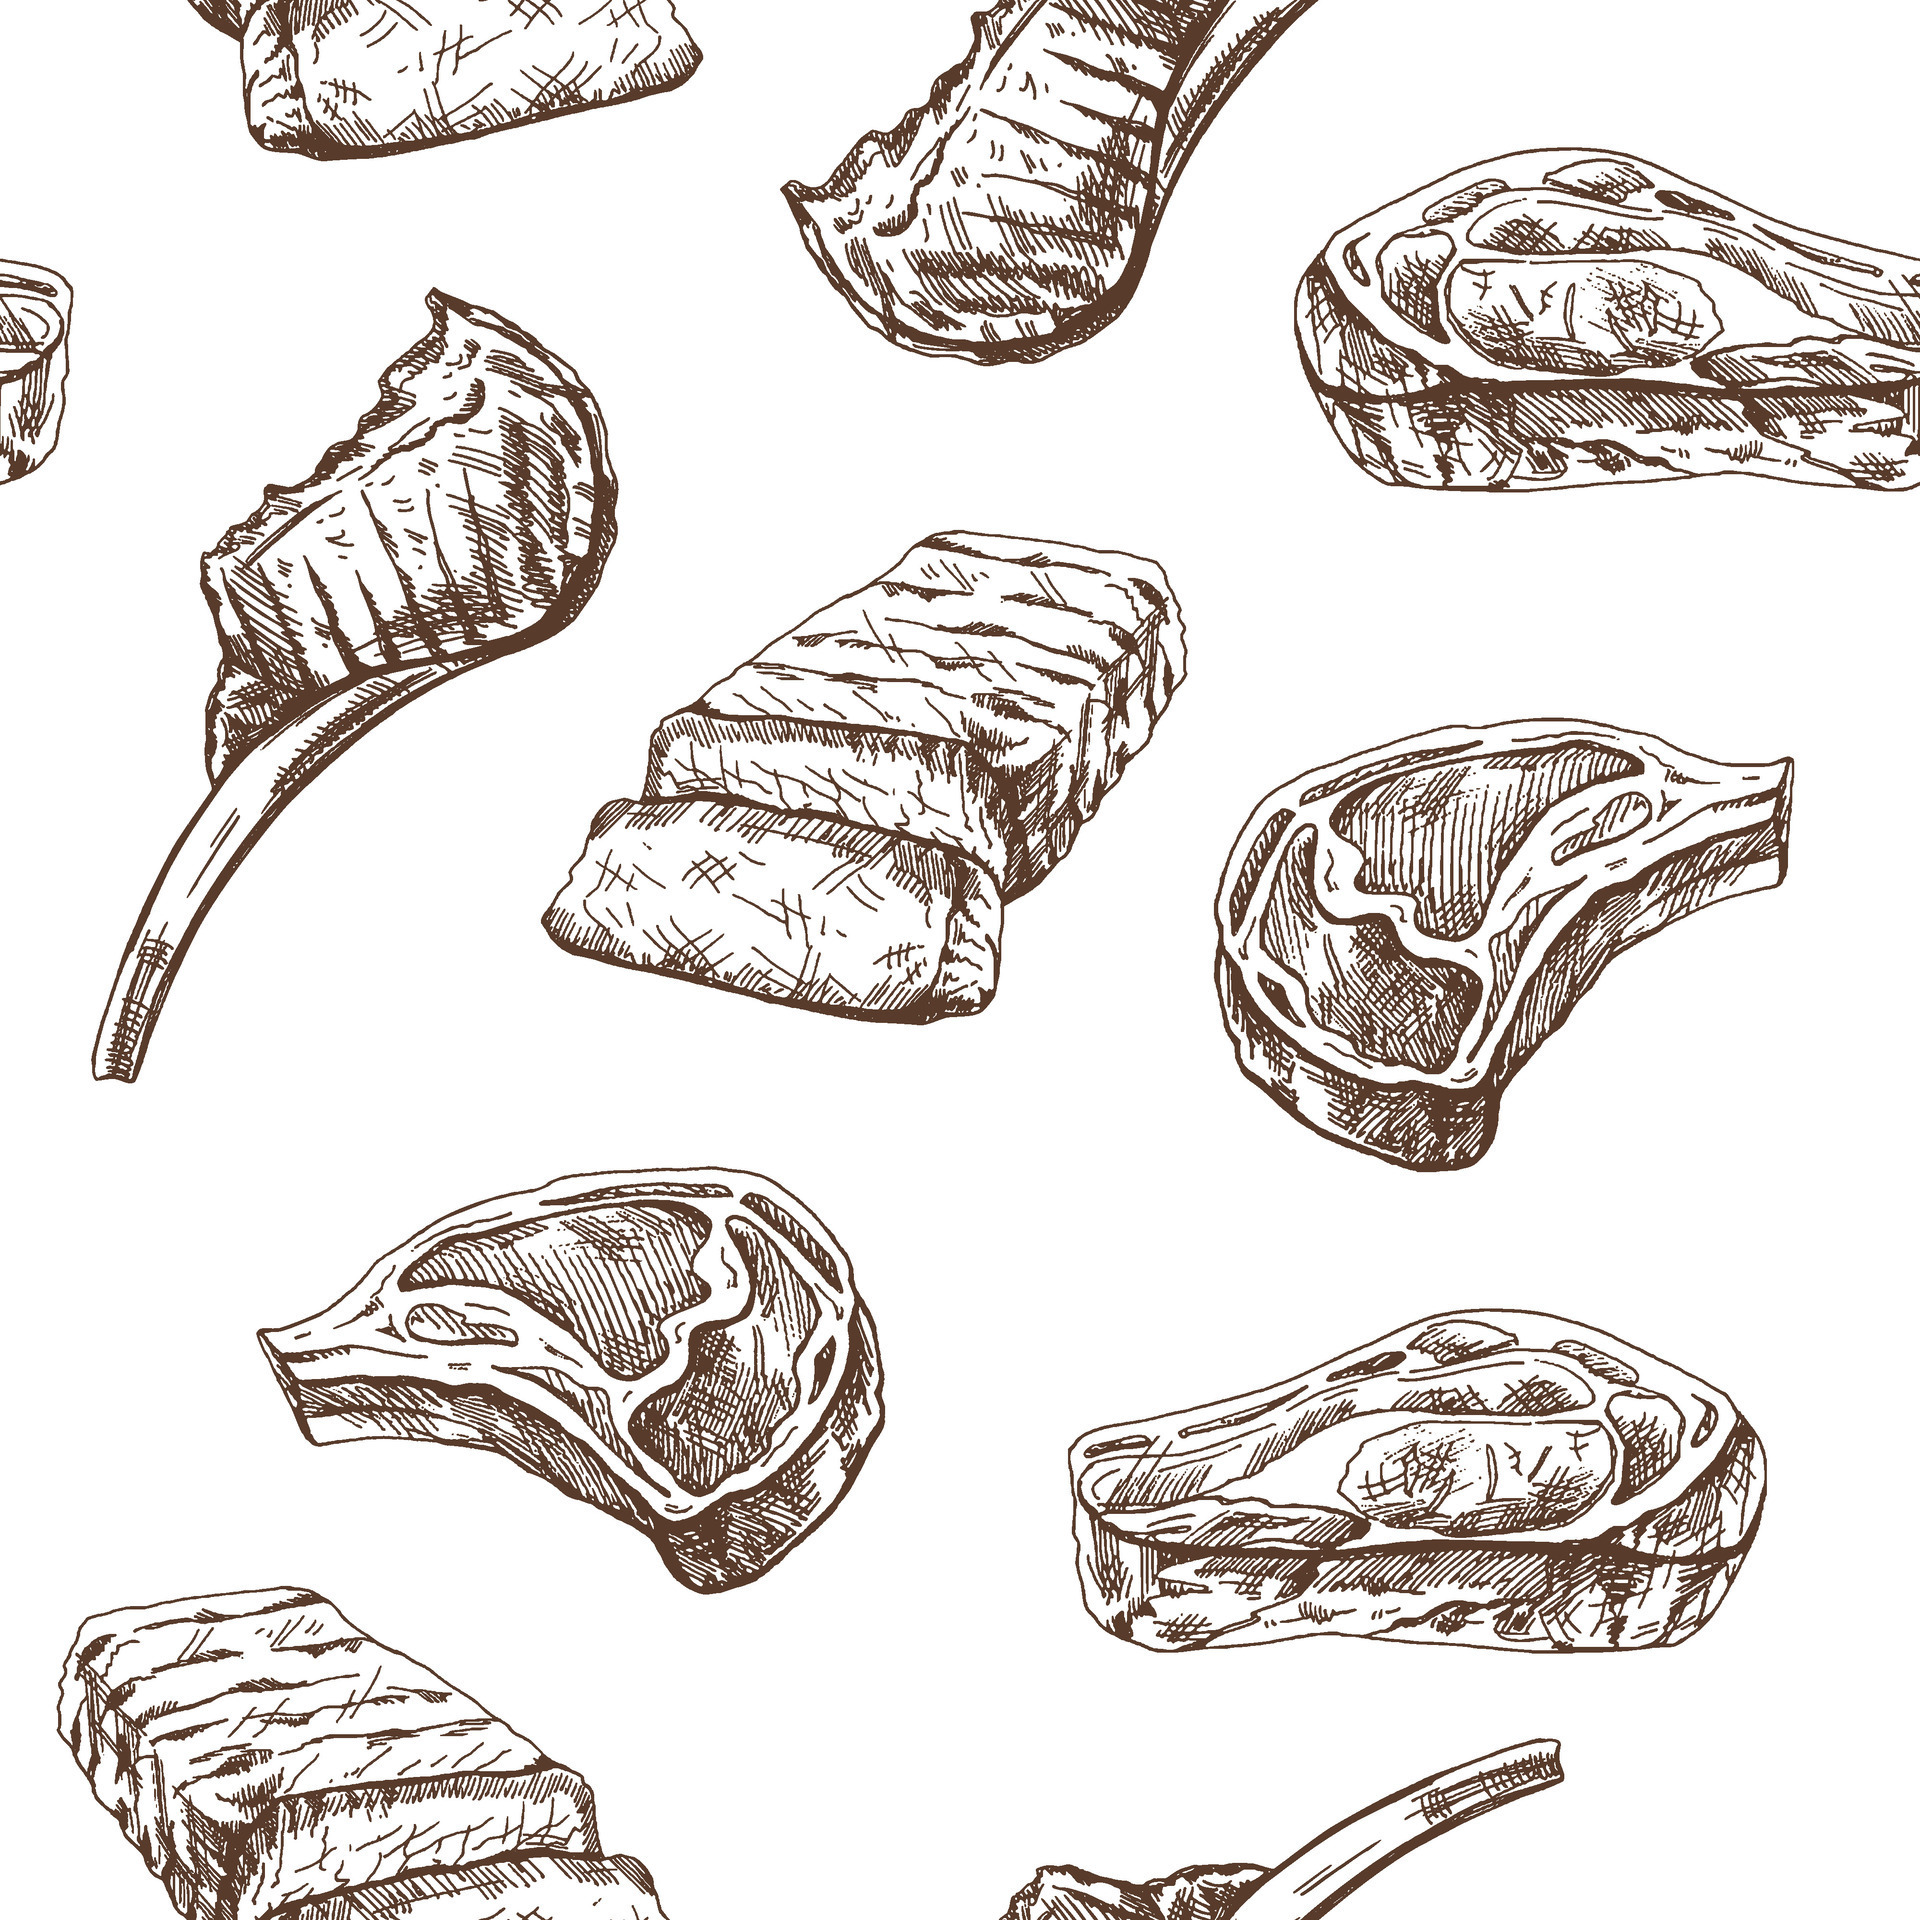 sausage salad steak drawing graphic - Stock Image - Everypixel